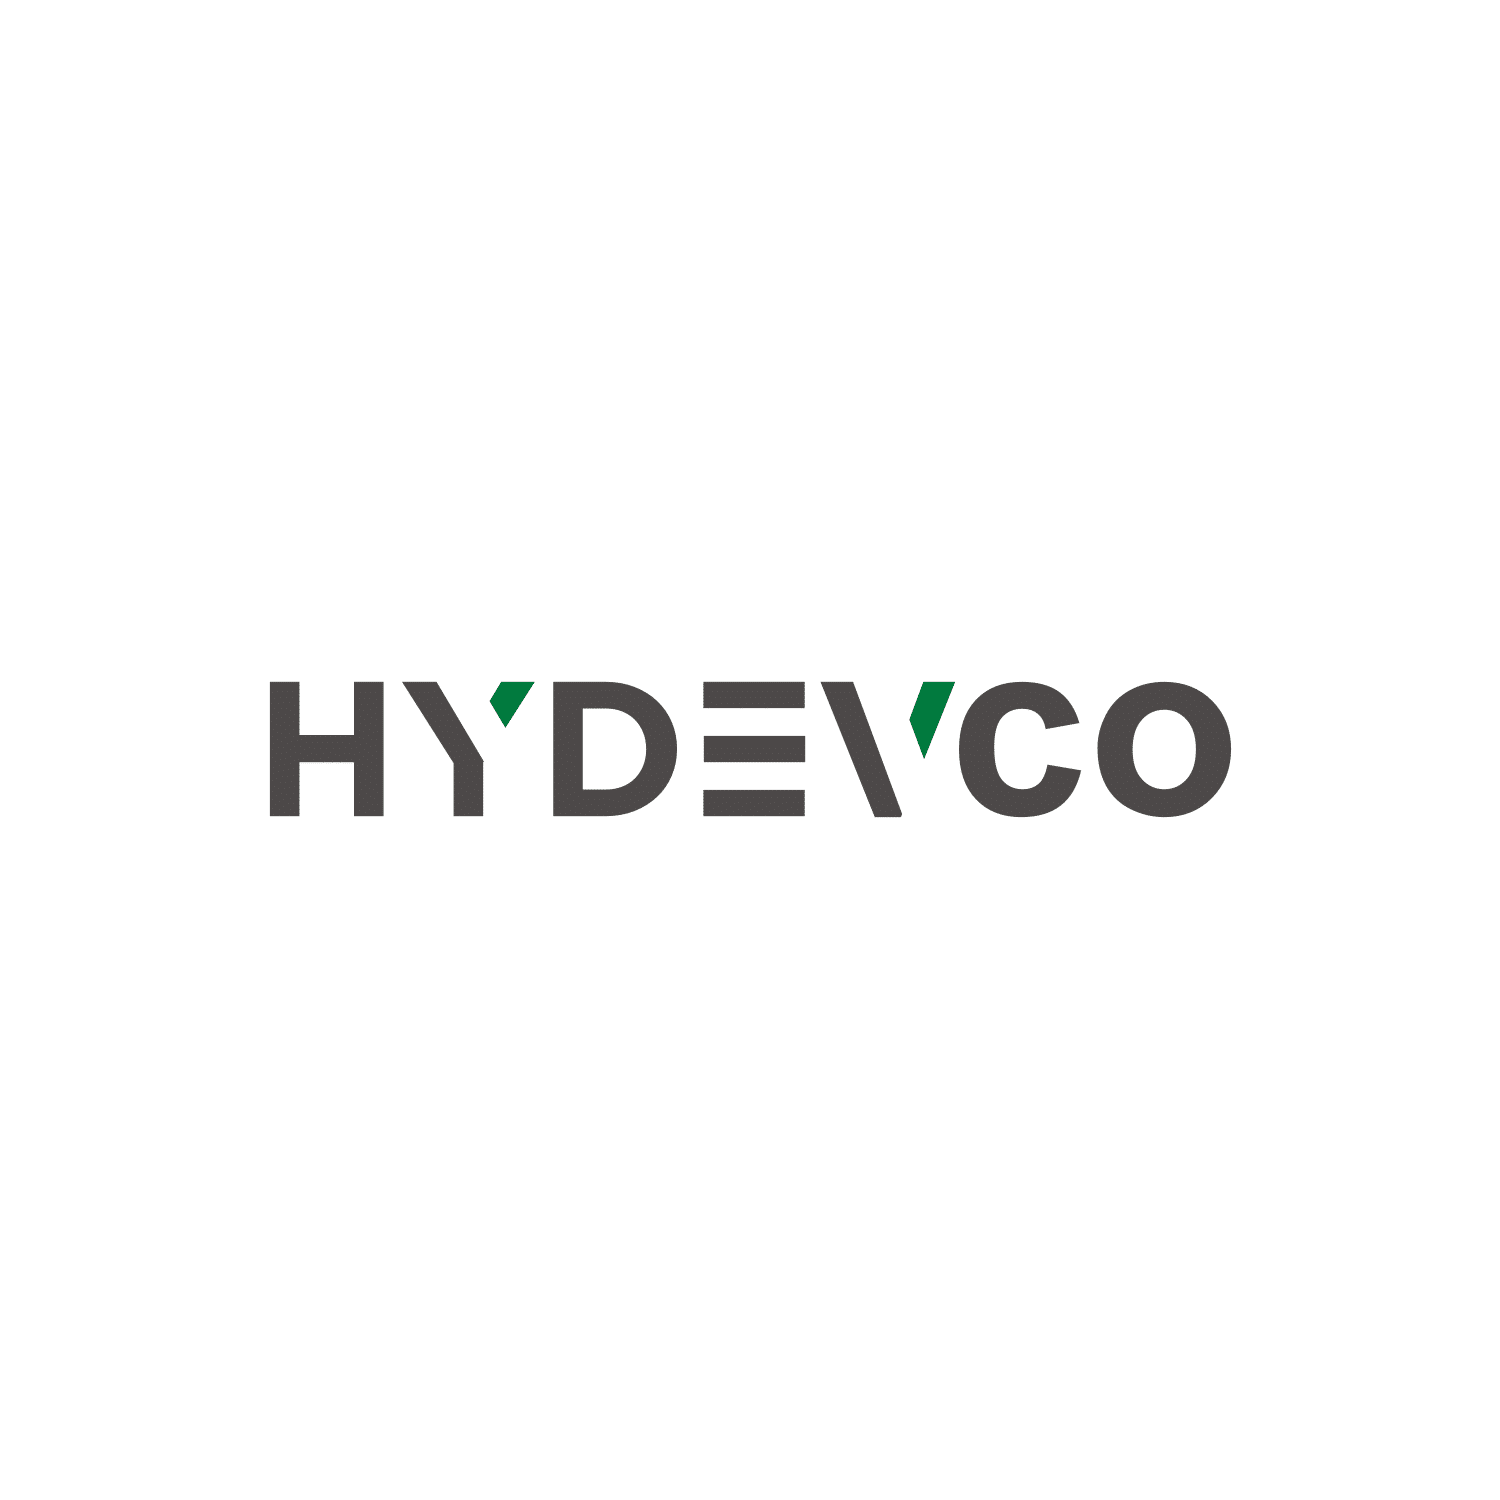 Hydevco logo